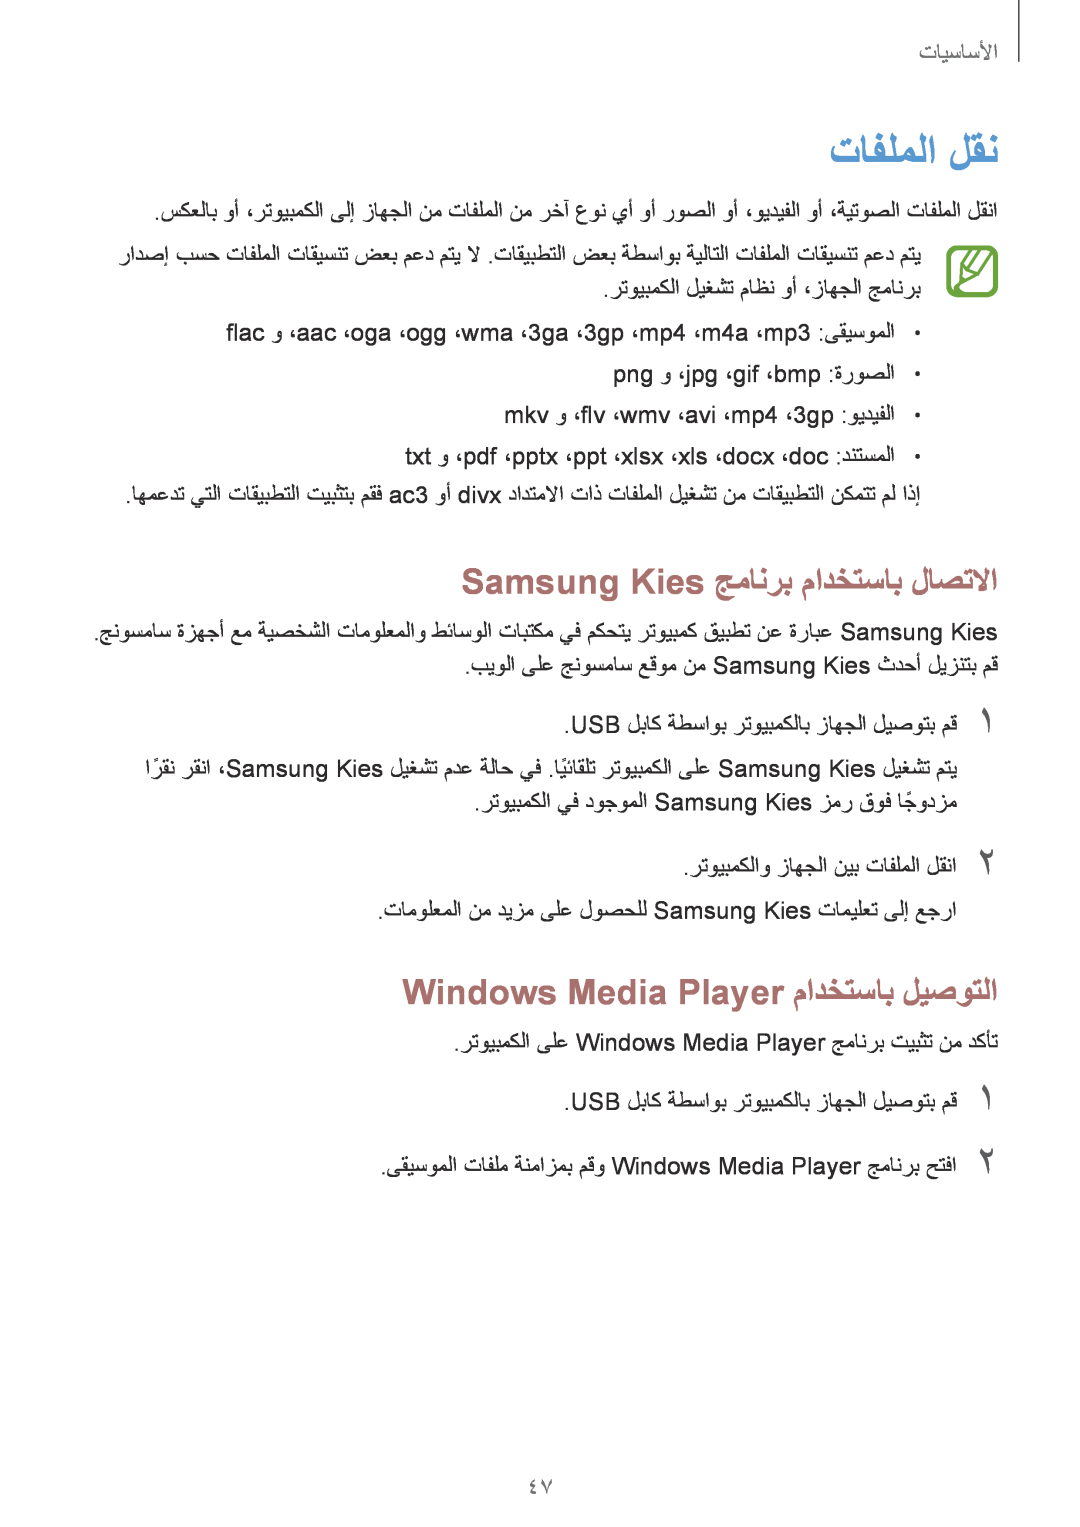 Samsung GT-I9515ZWAKSA تافلملا لقن, Samsung Kies جمانرب مادختساب لاصتلاا, Windows Media Player مادختساب ليصوتلا, الأساسيأا 